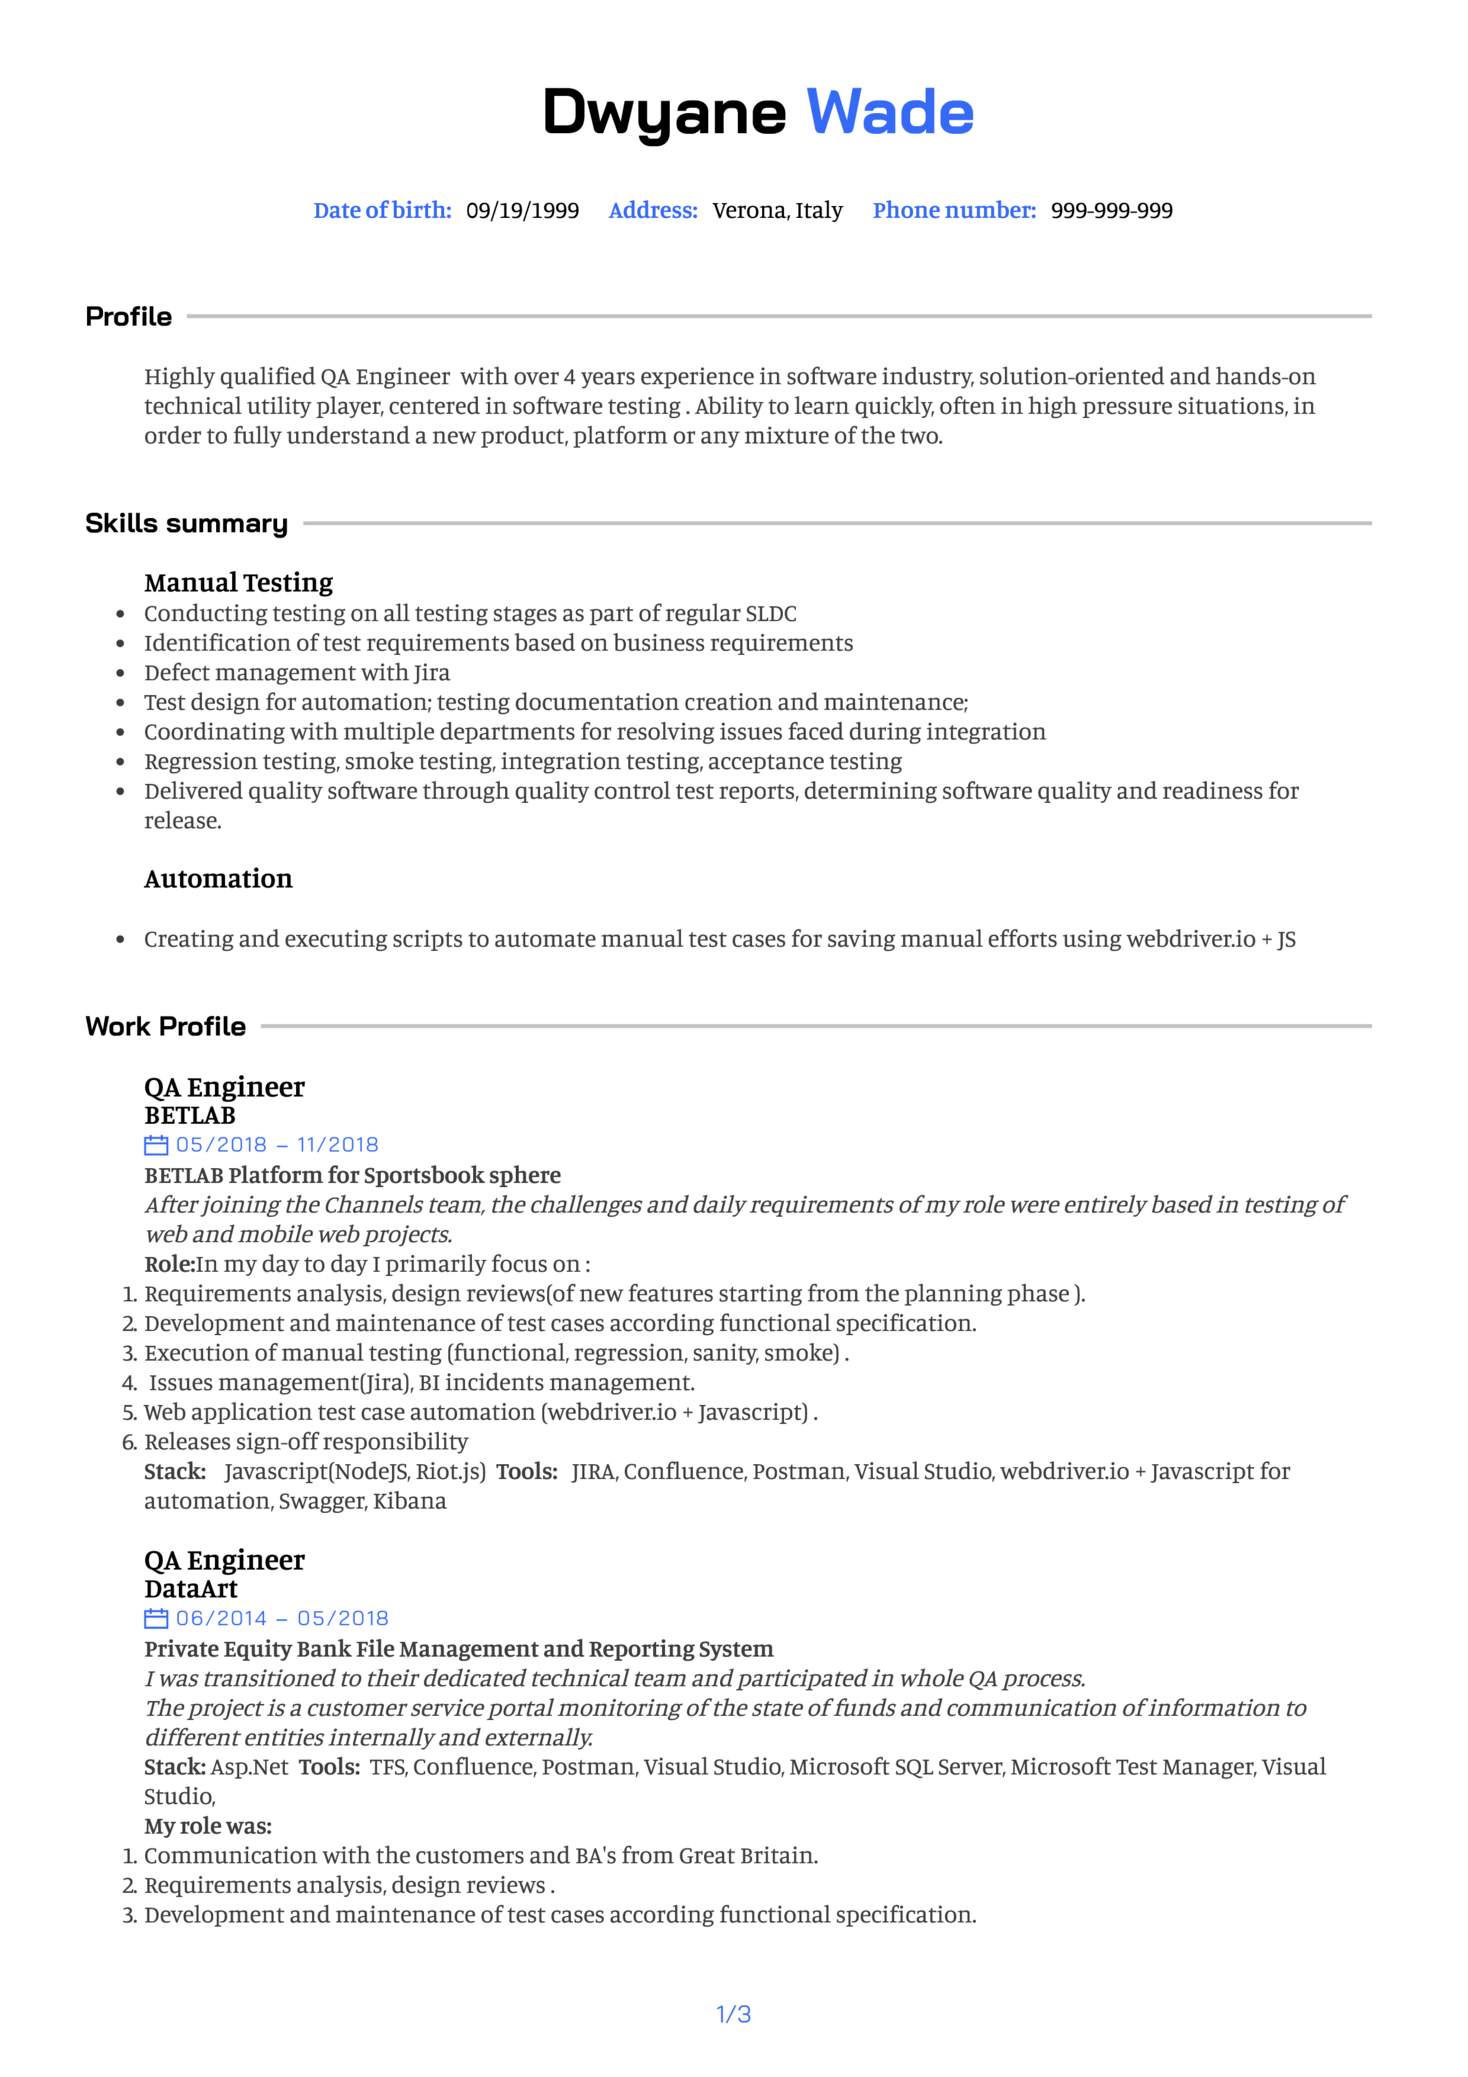 professional resume writing service